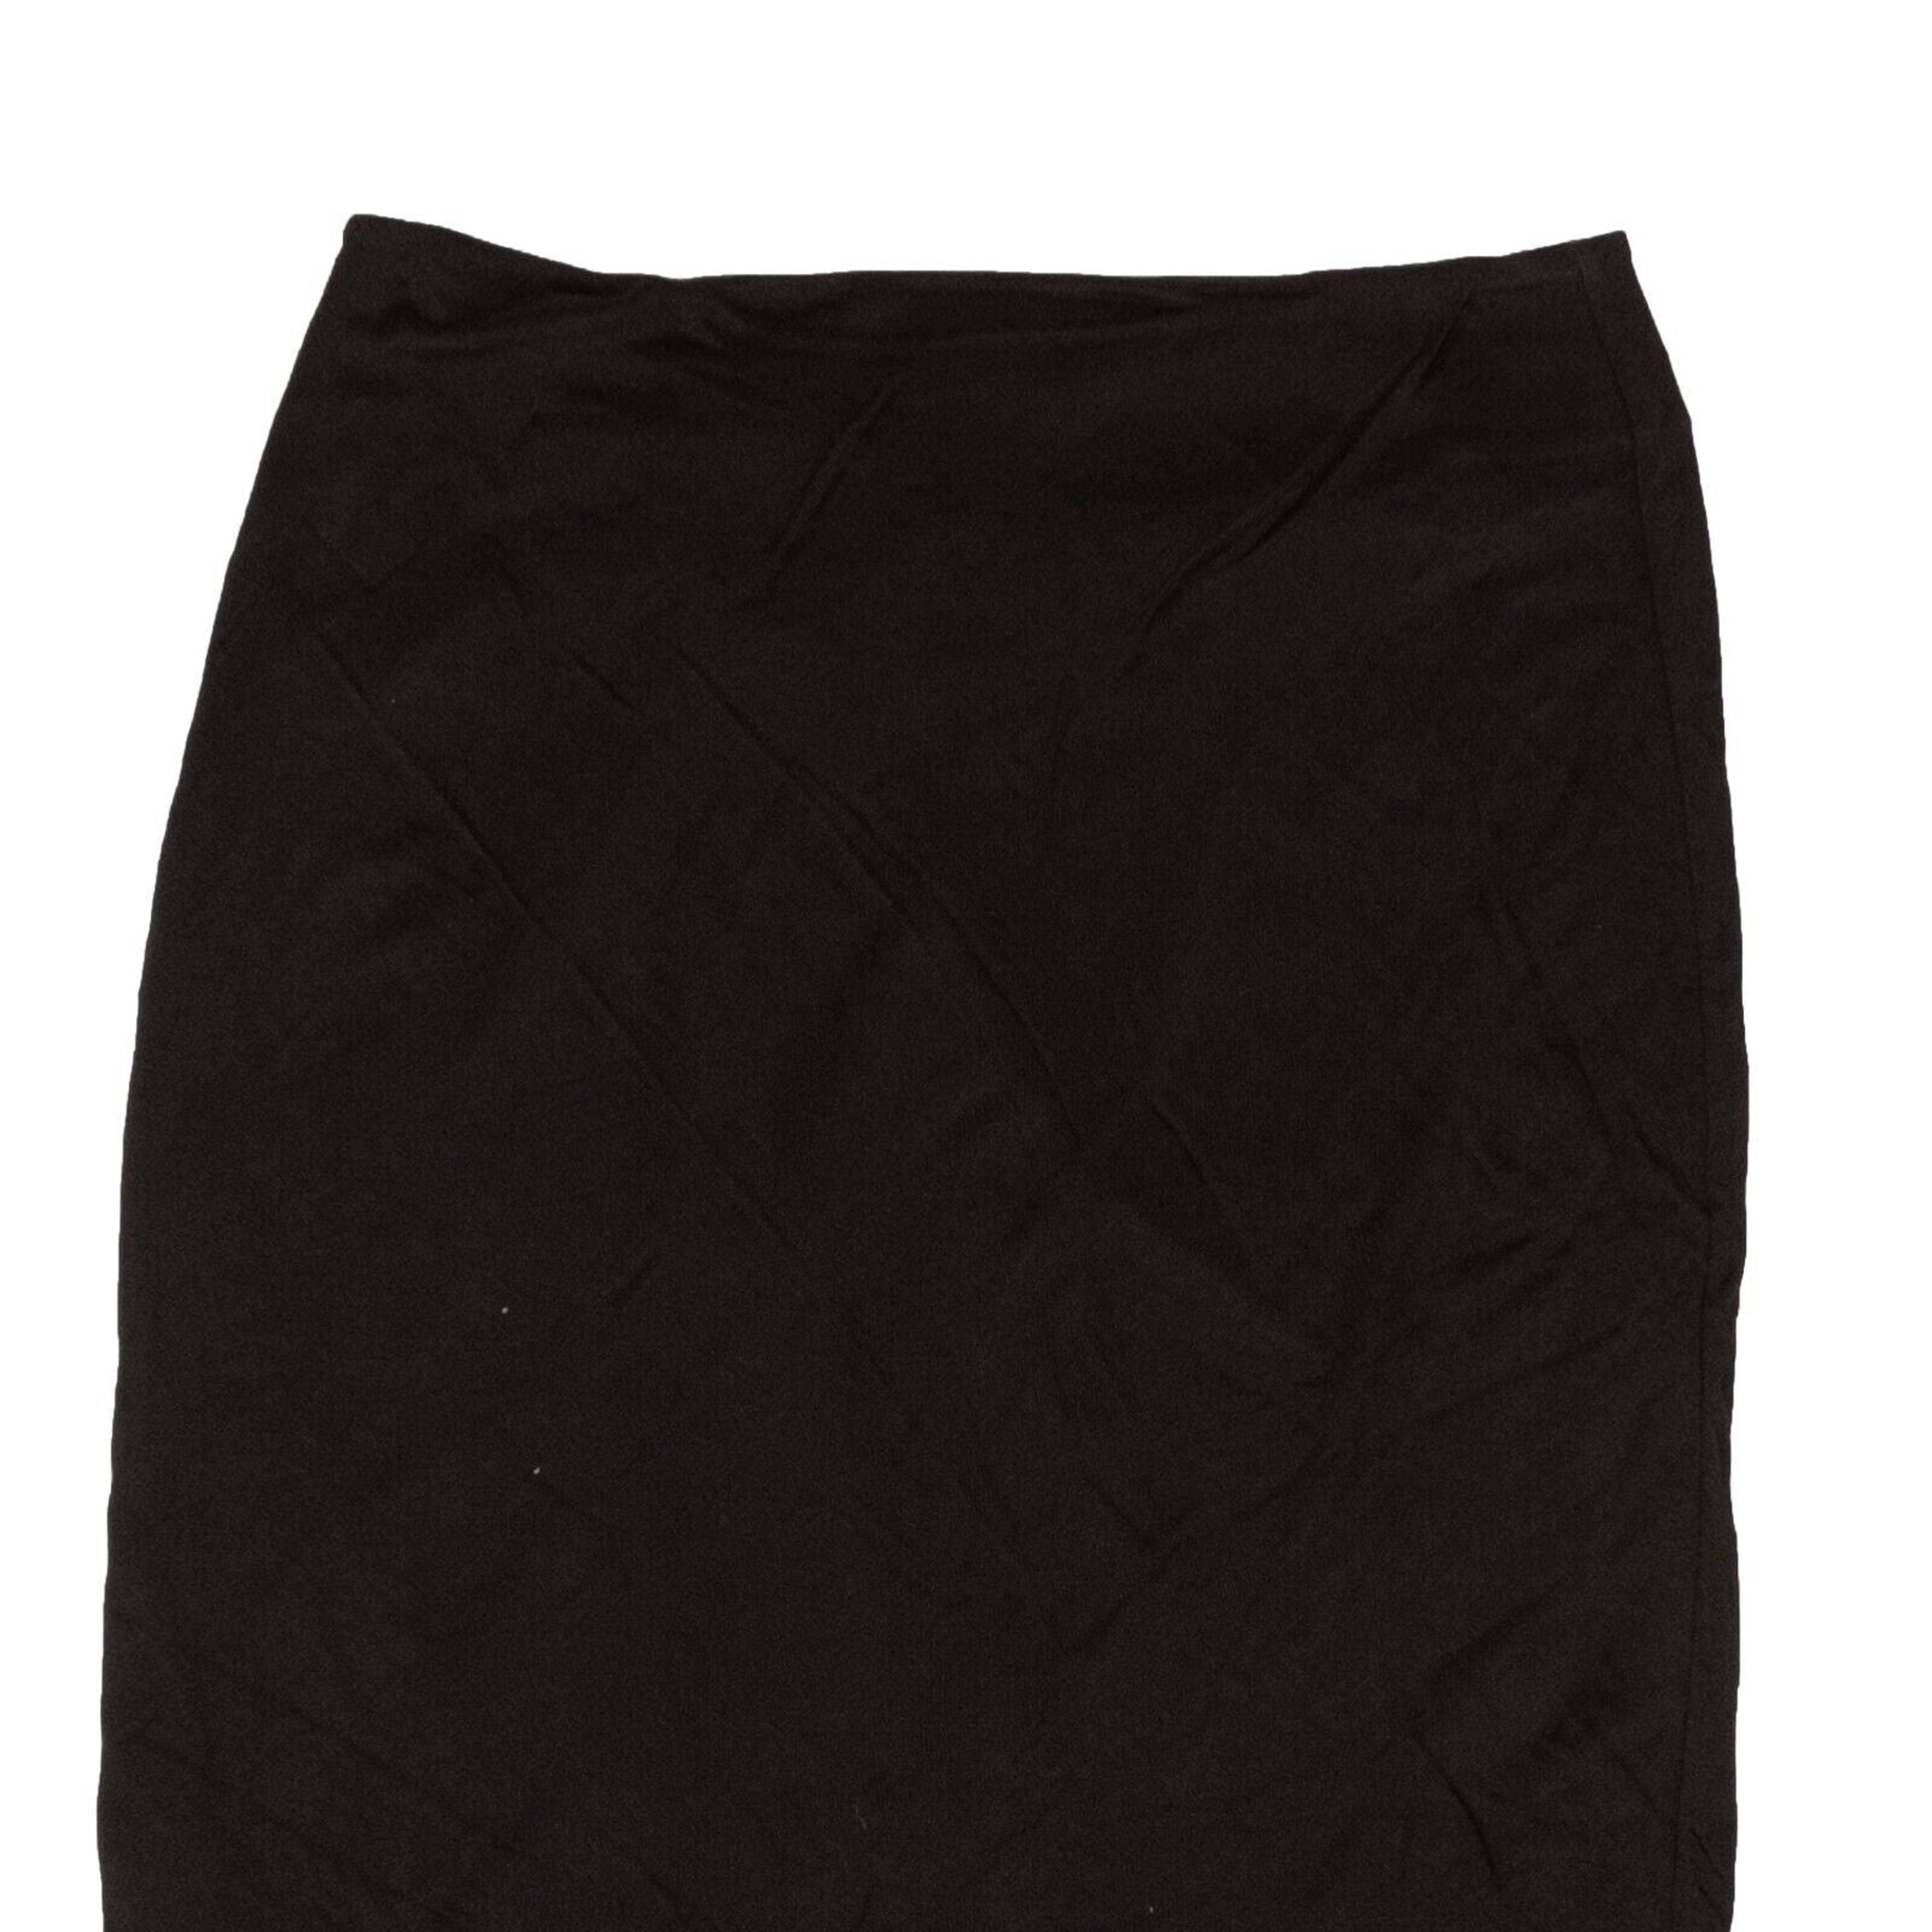 Alternate View 3 of Black Polyester Keyhole Flare Skirt